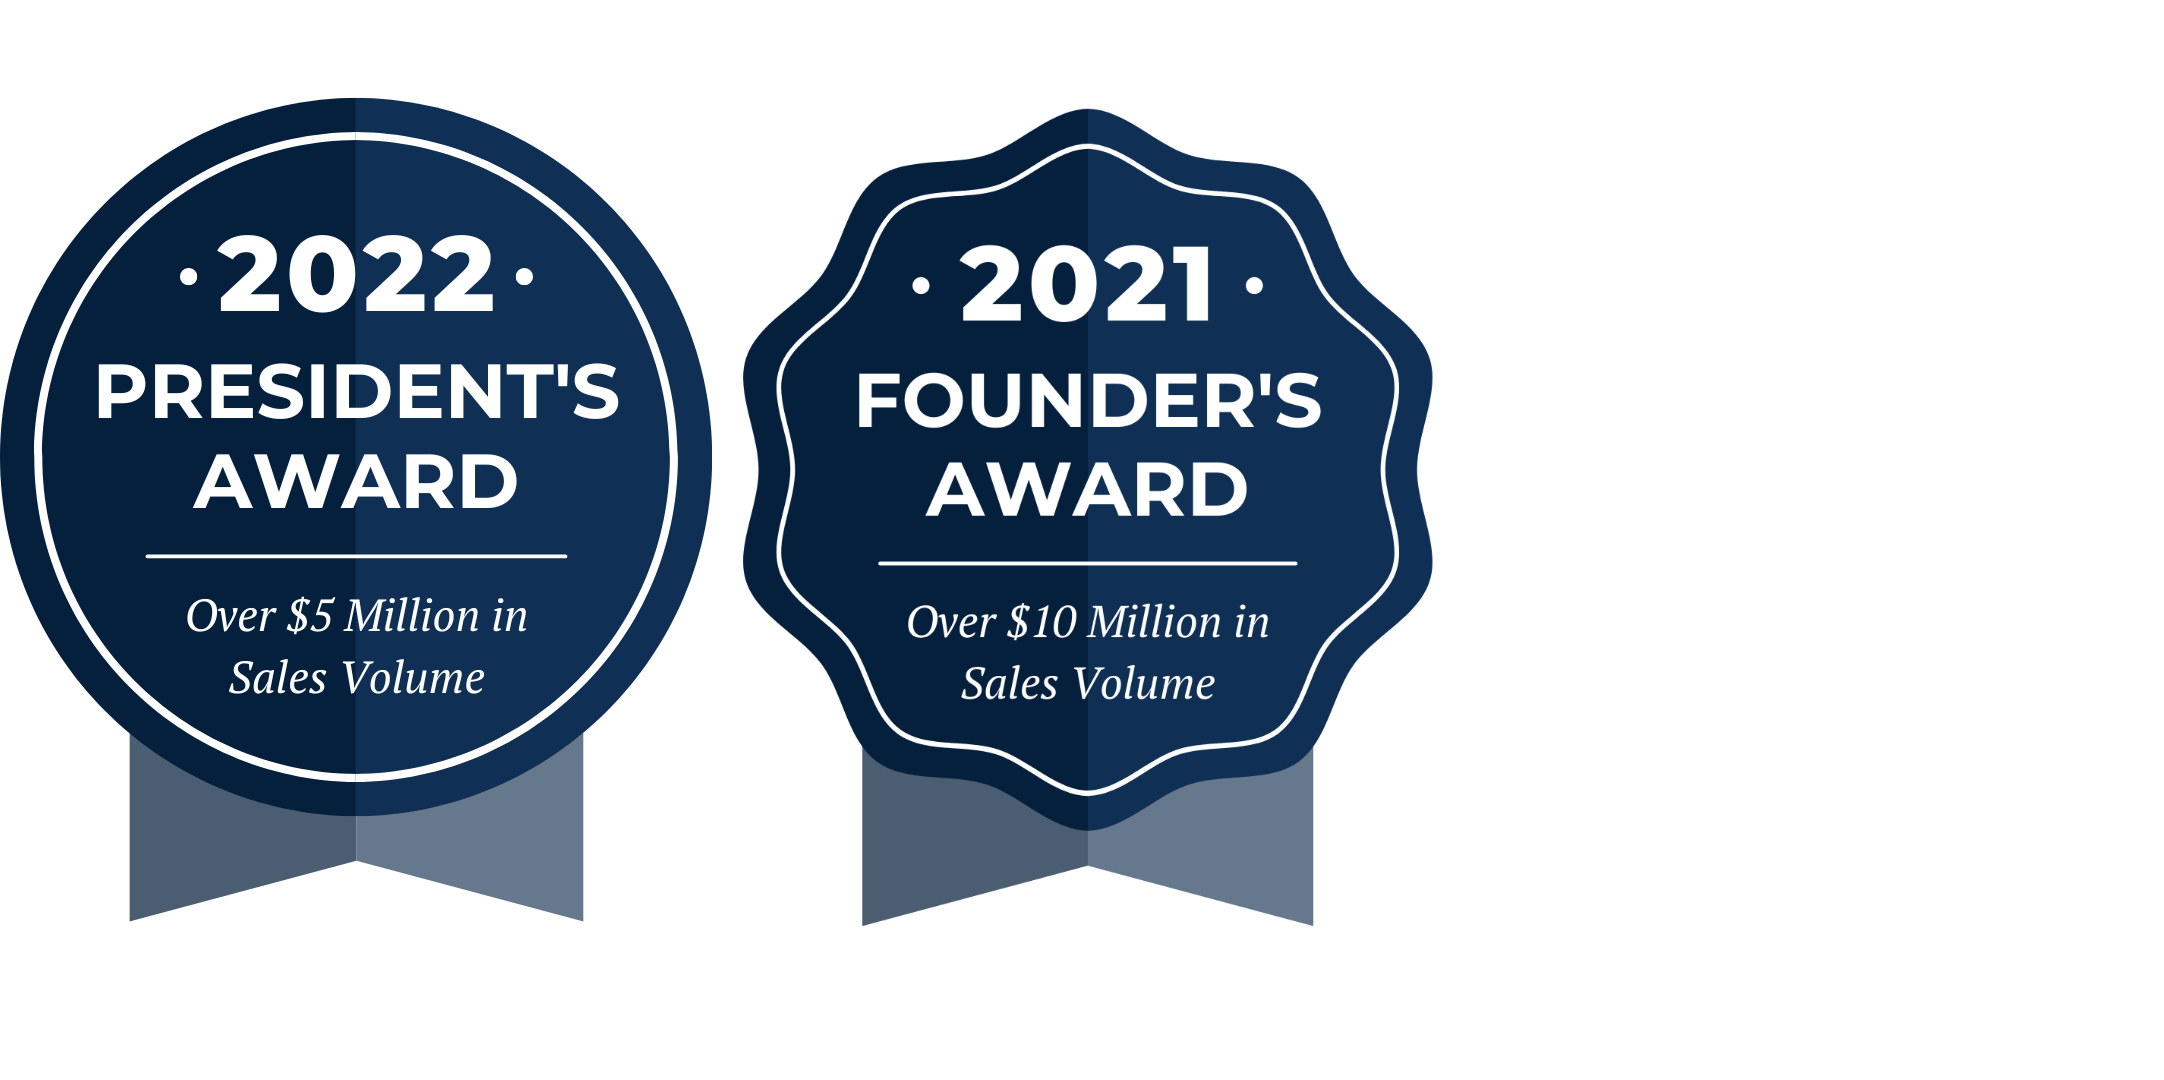 2022 President's Award and 2021 Founder's Award